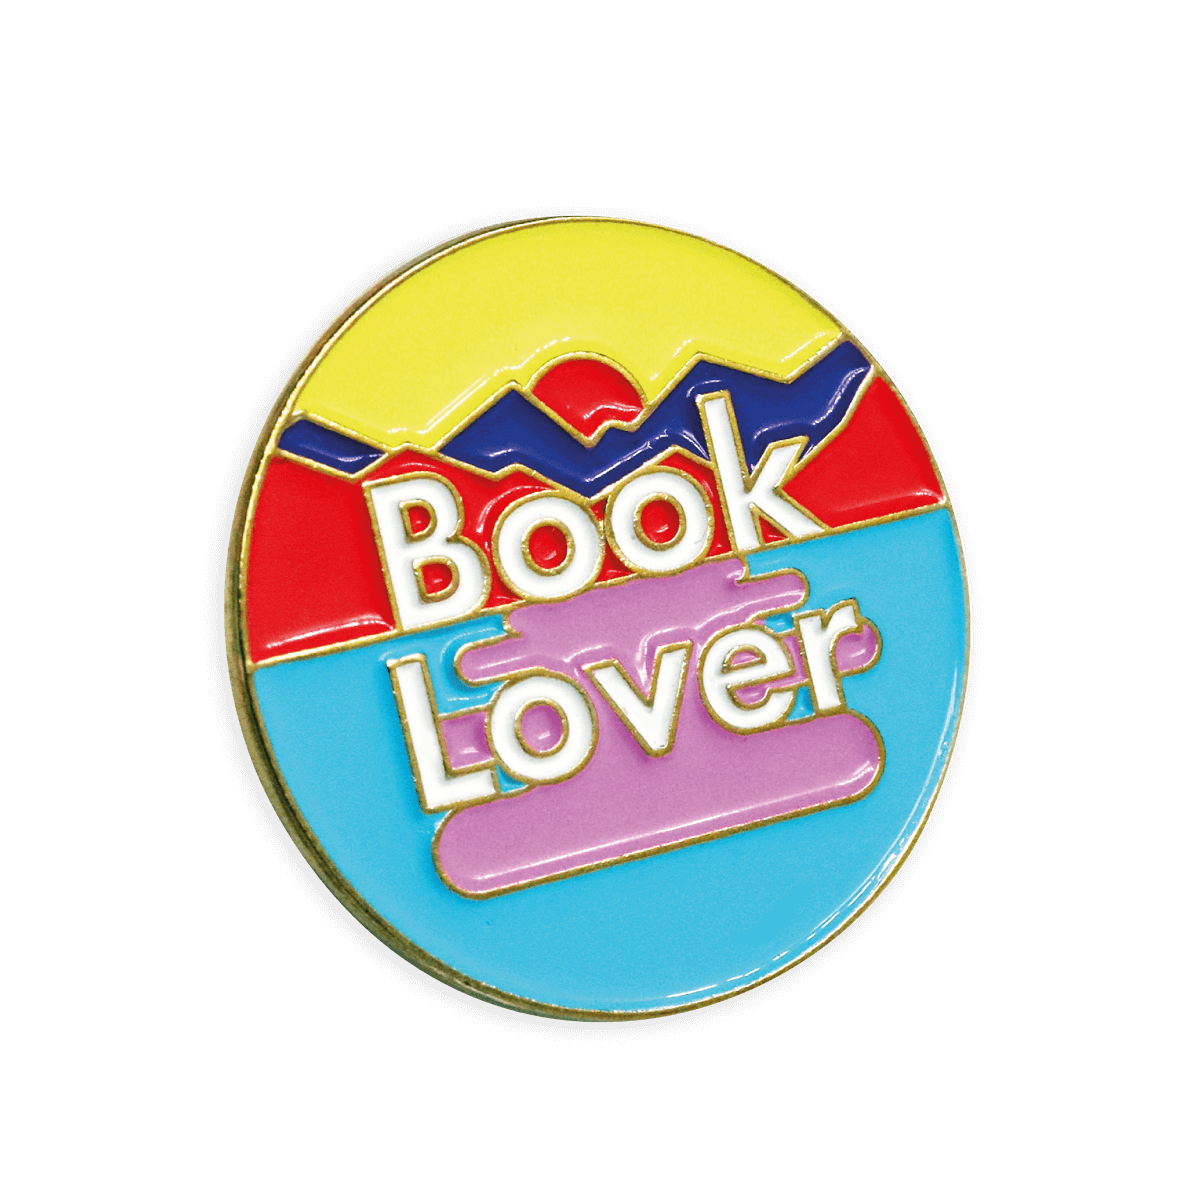 Book lover pin badge